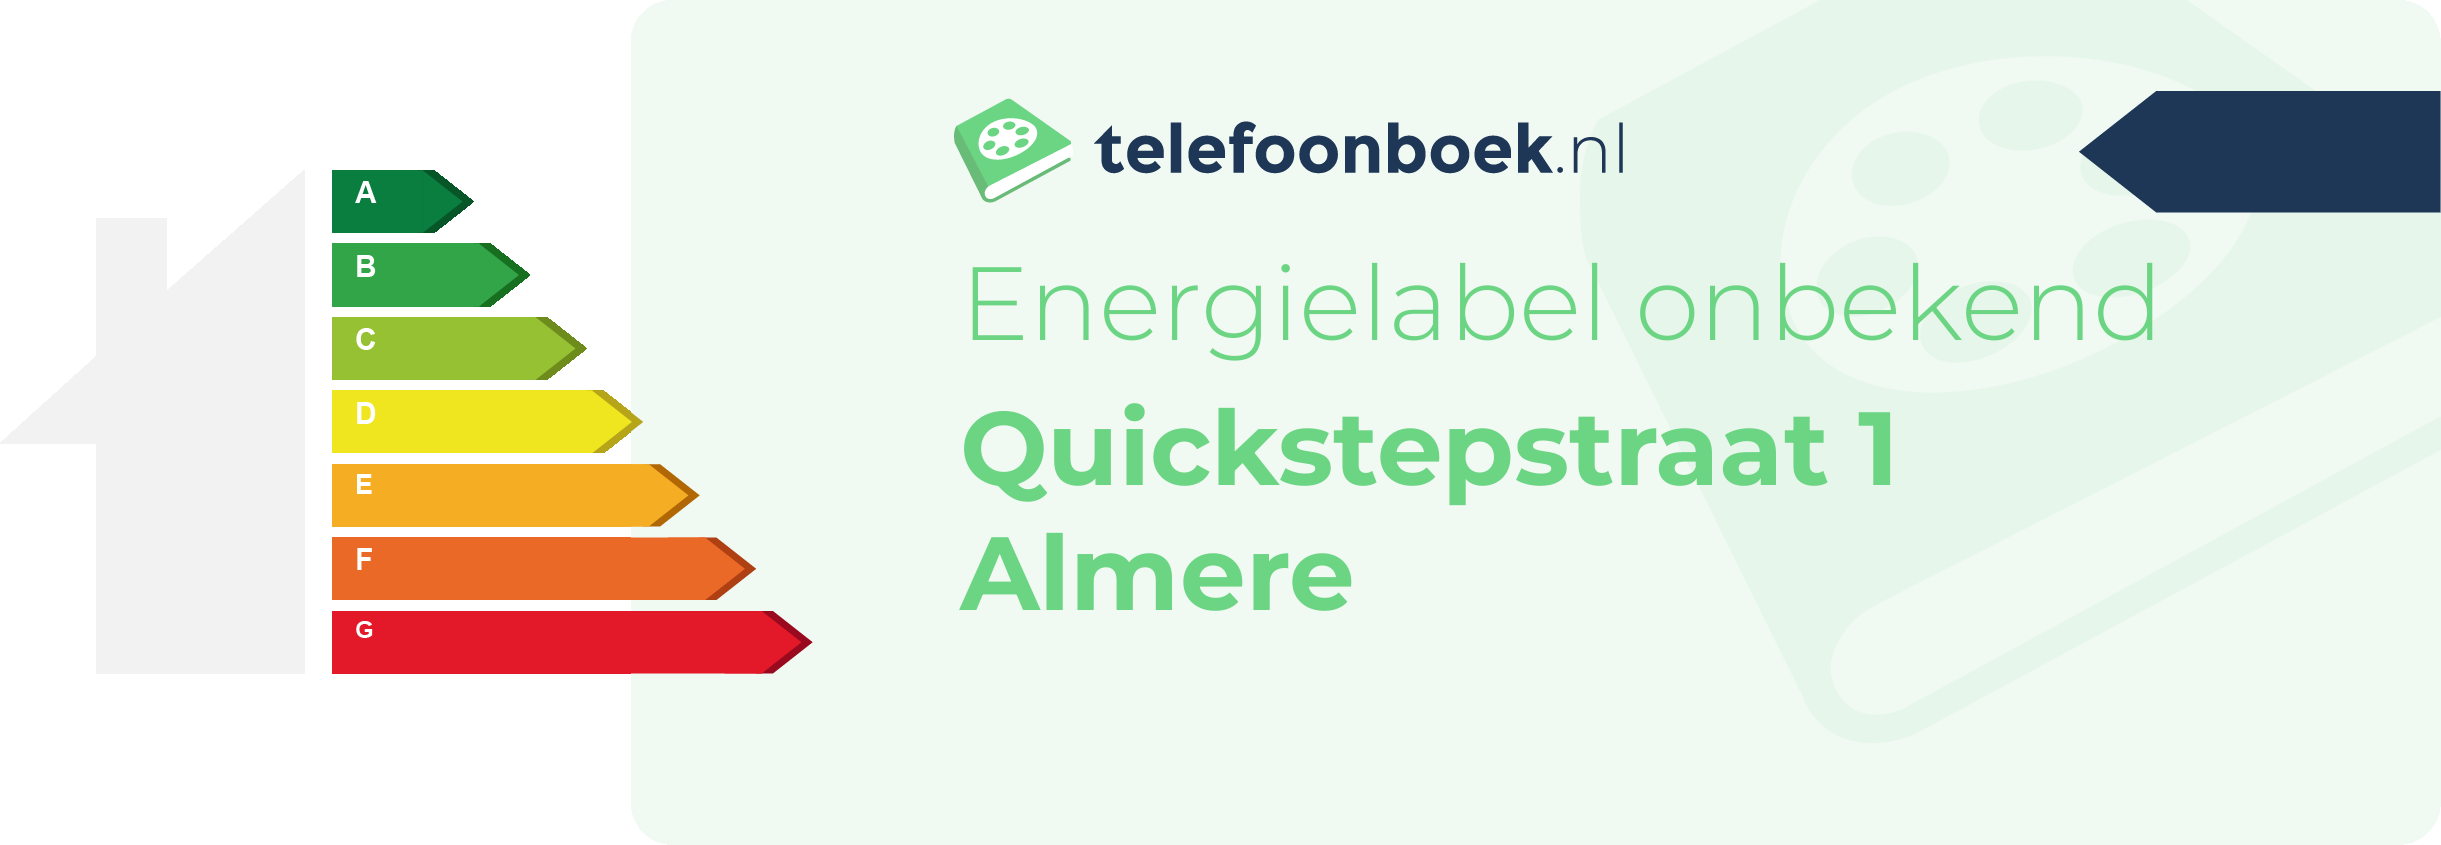 Energielabel Quickstepstraat 1 Almere